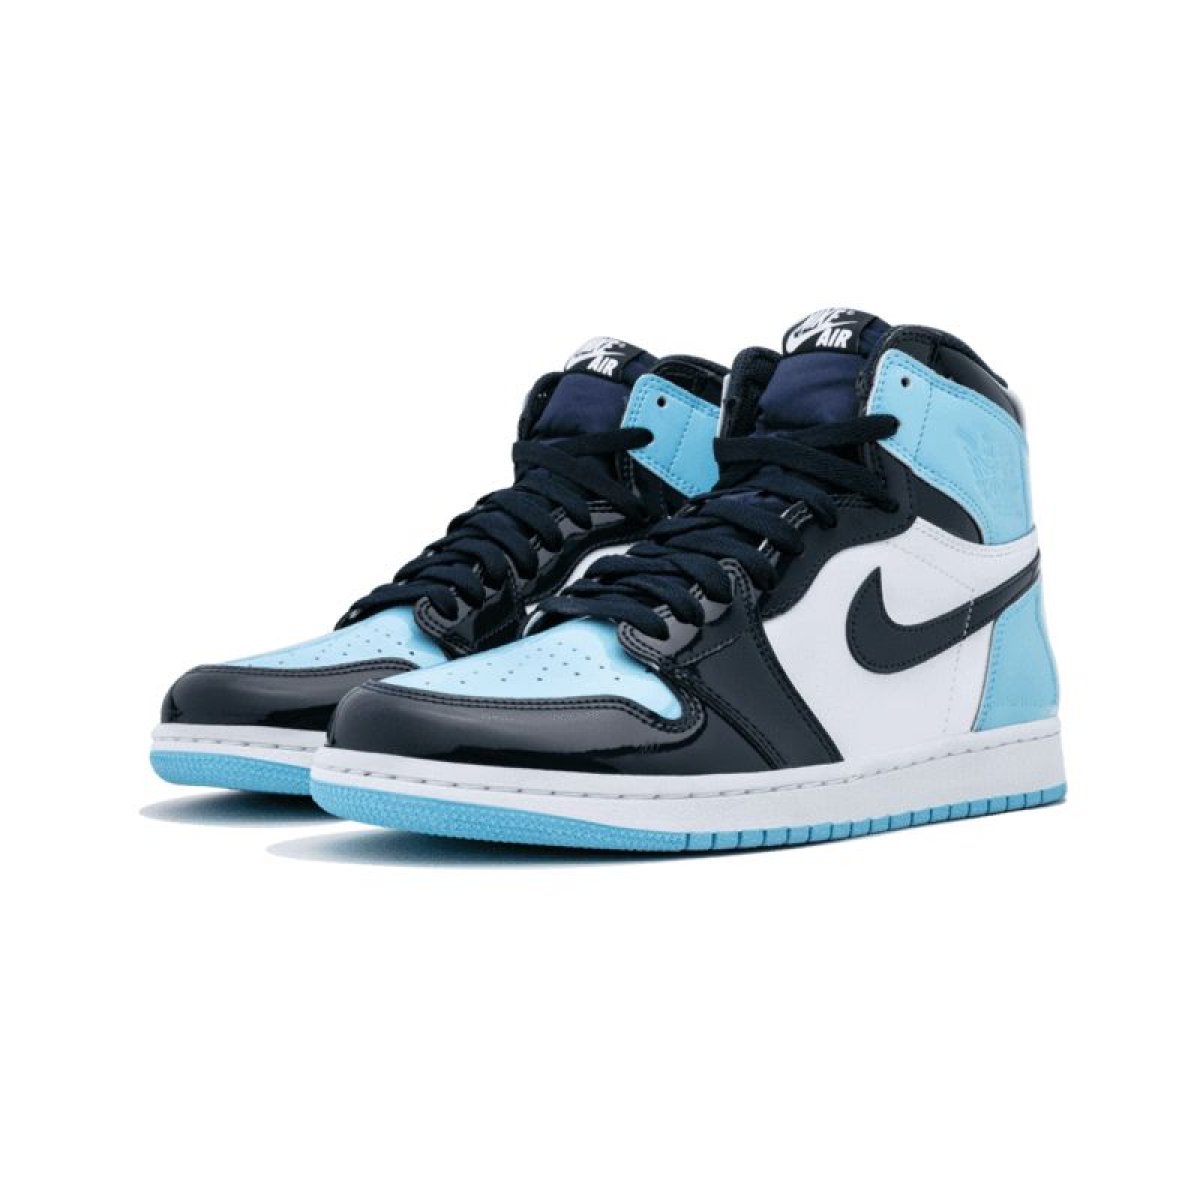 Nike Air Jordan 1 High UNC Patent Leather Obsidian/Blue Chill-White -  Consegna gratuita | Spartoo.it ! - Scarpe Sneakers alte 160,00 €